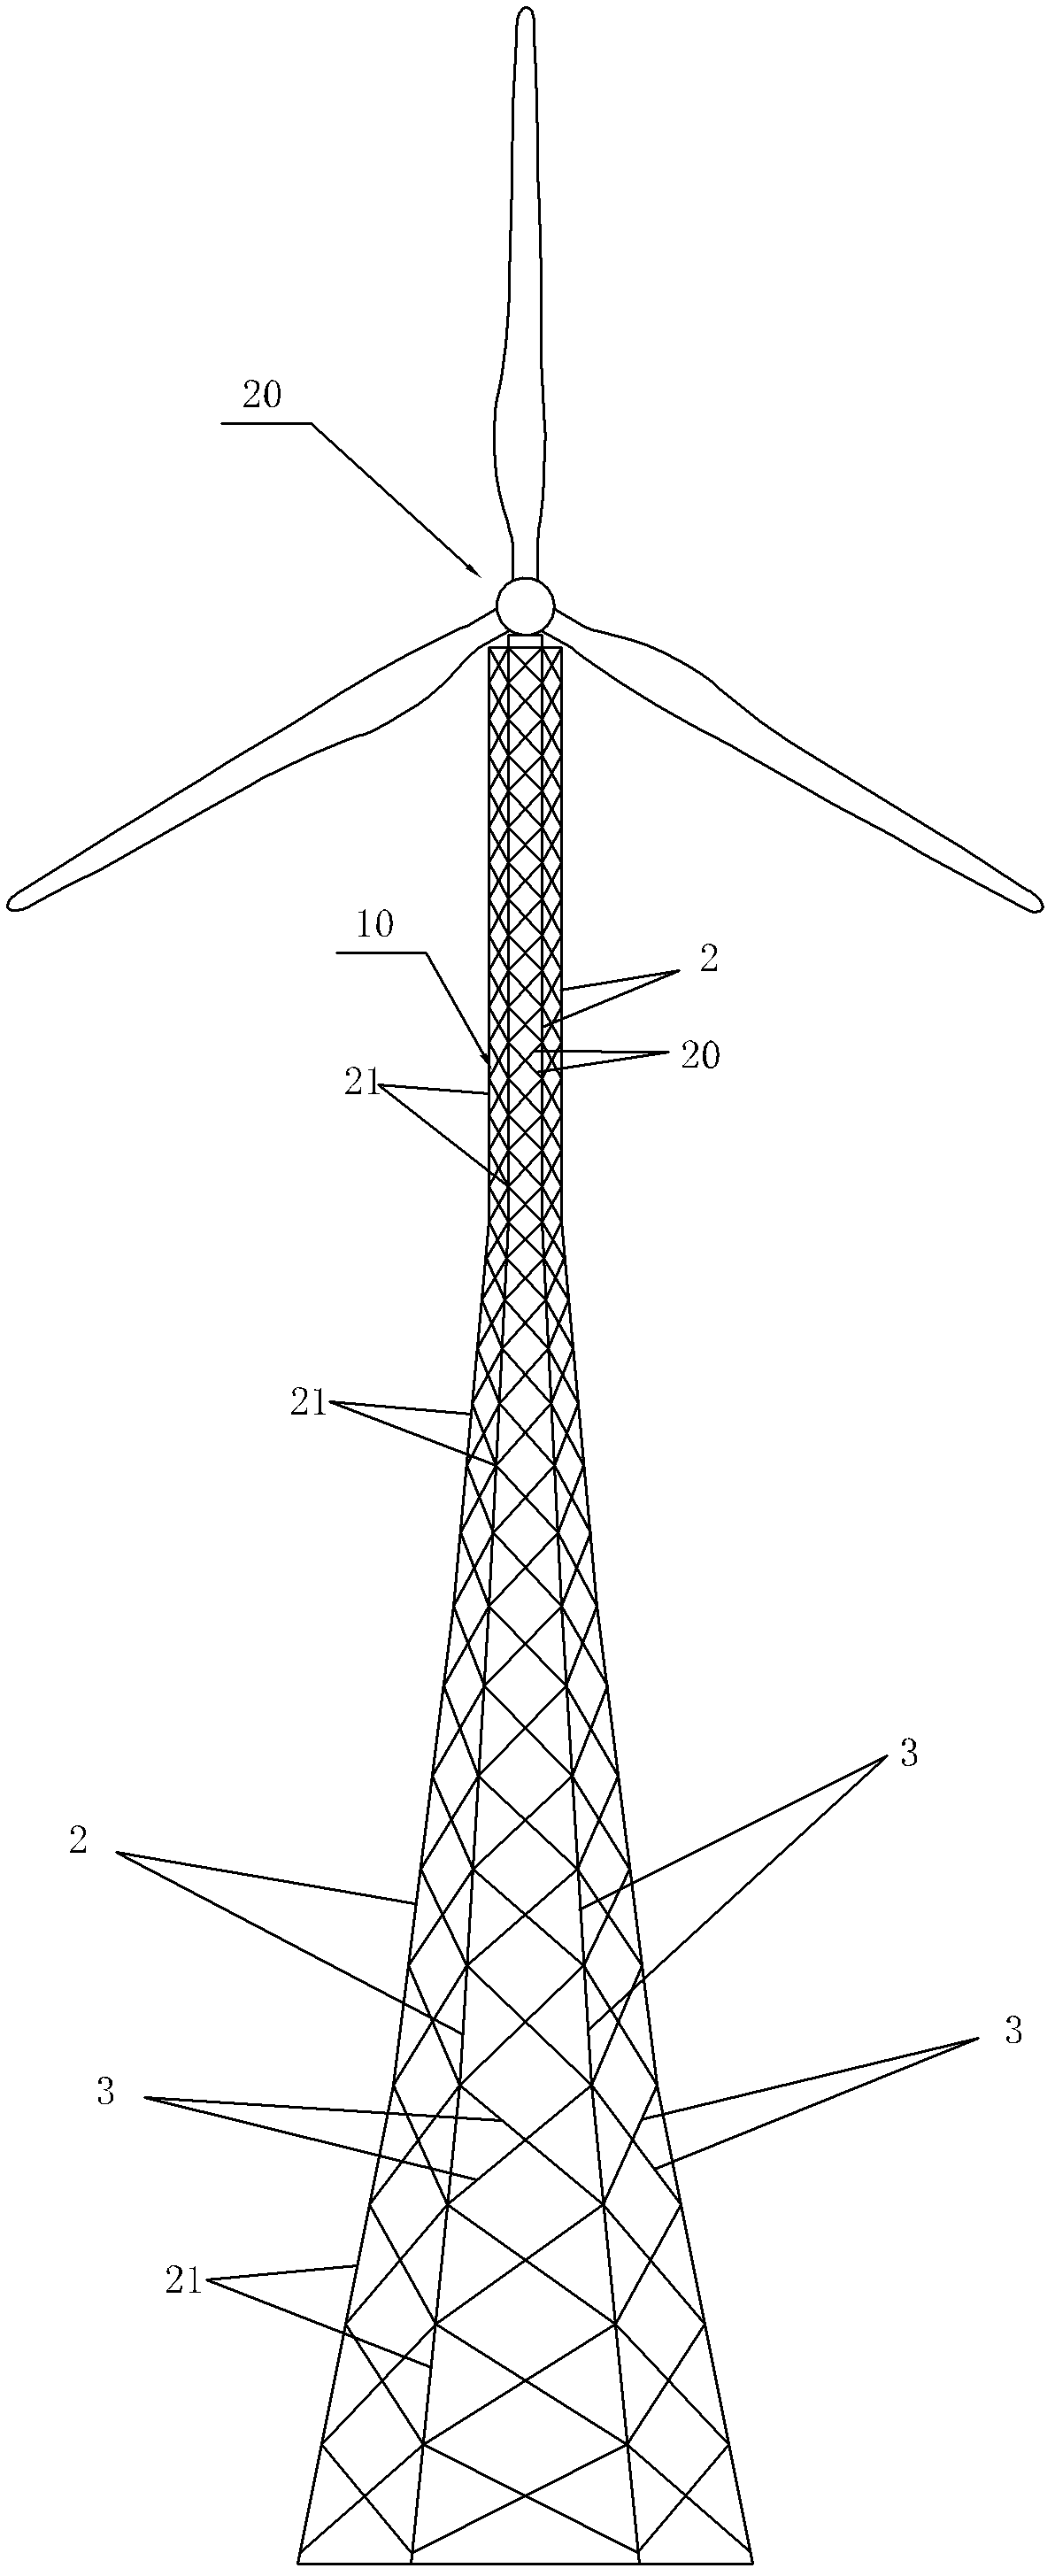 Hexagonal tower structure of wind driven generator